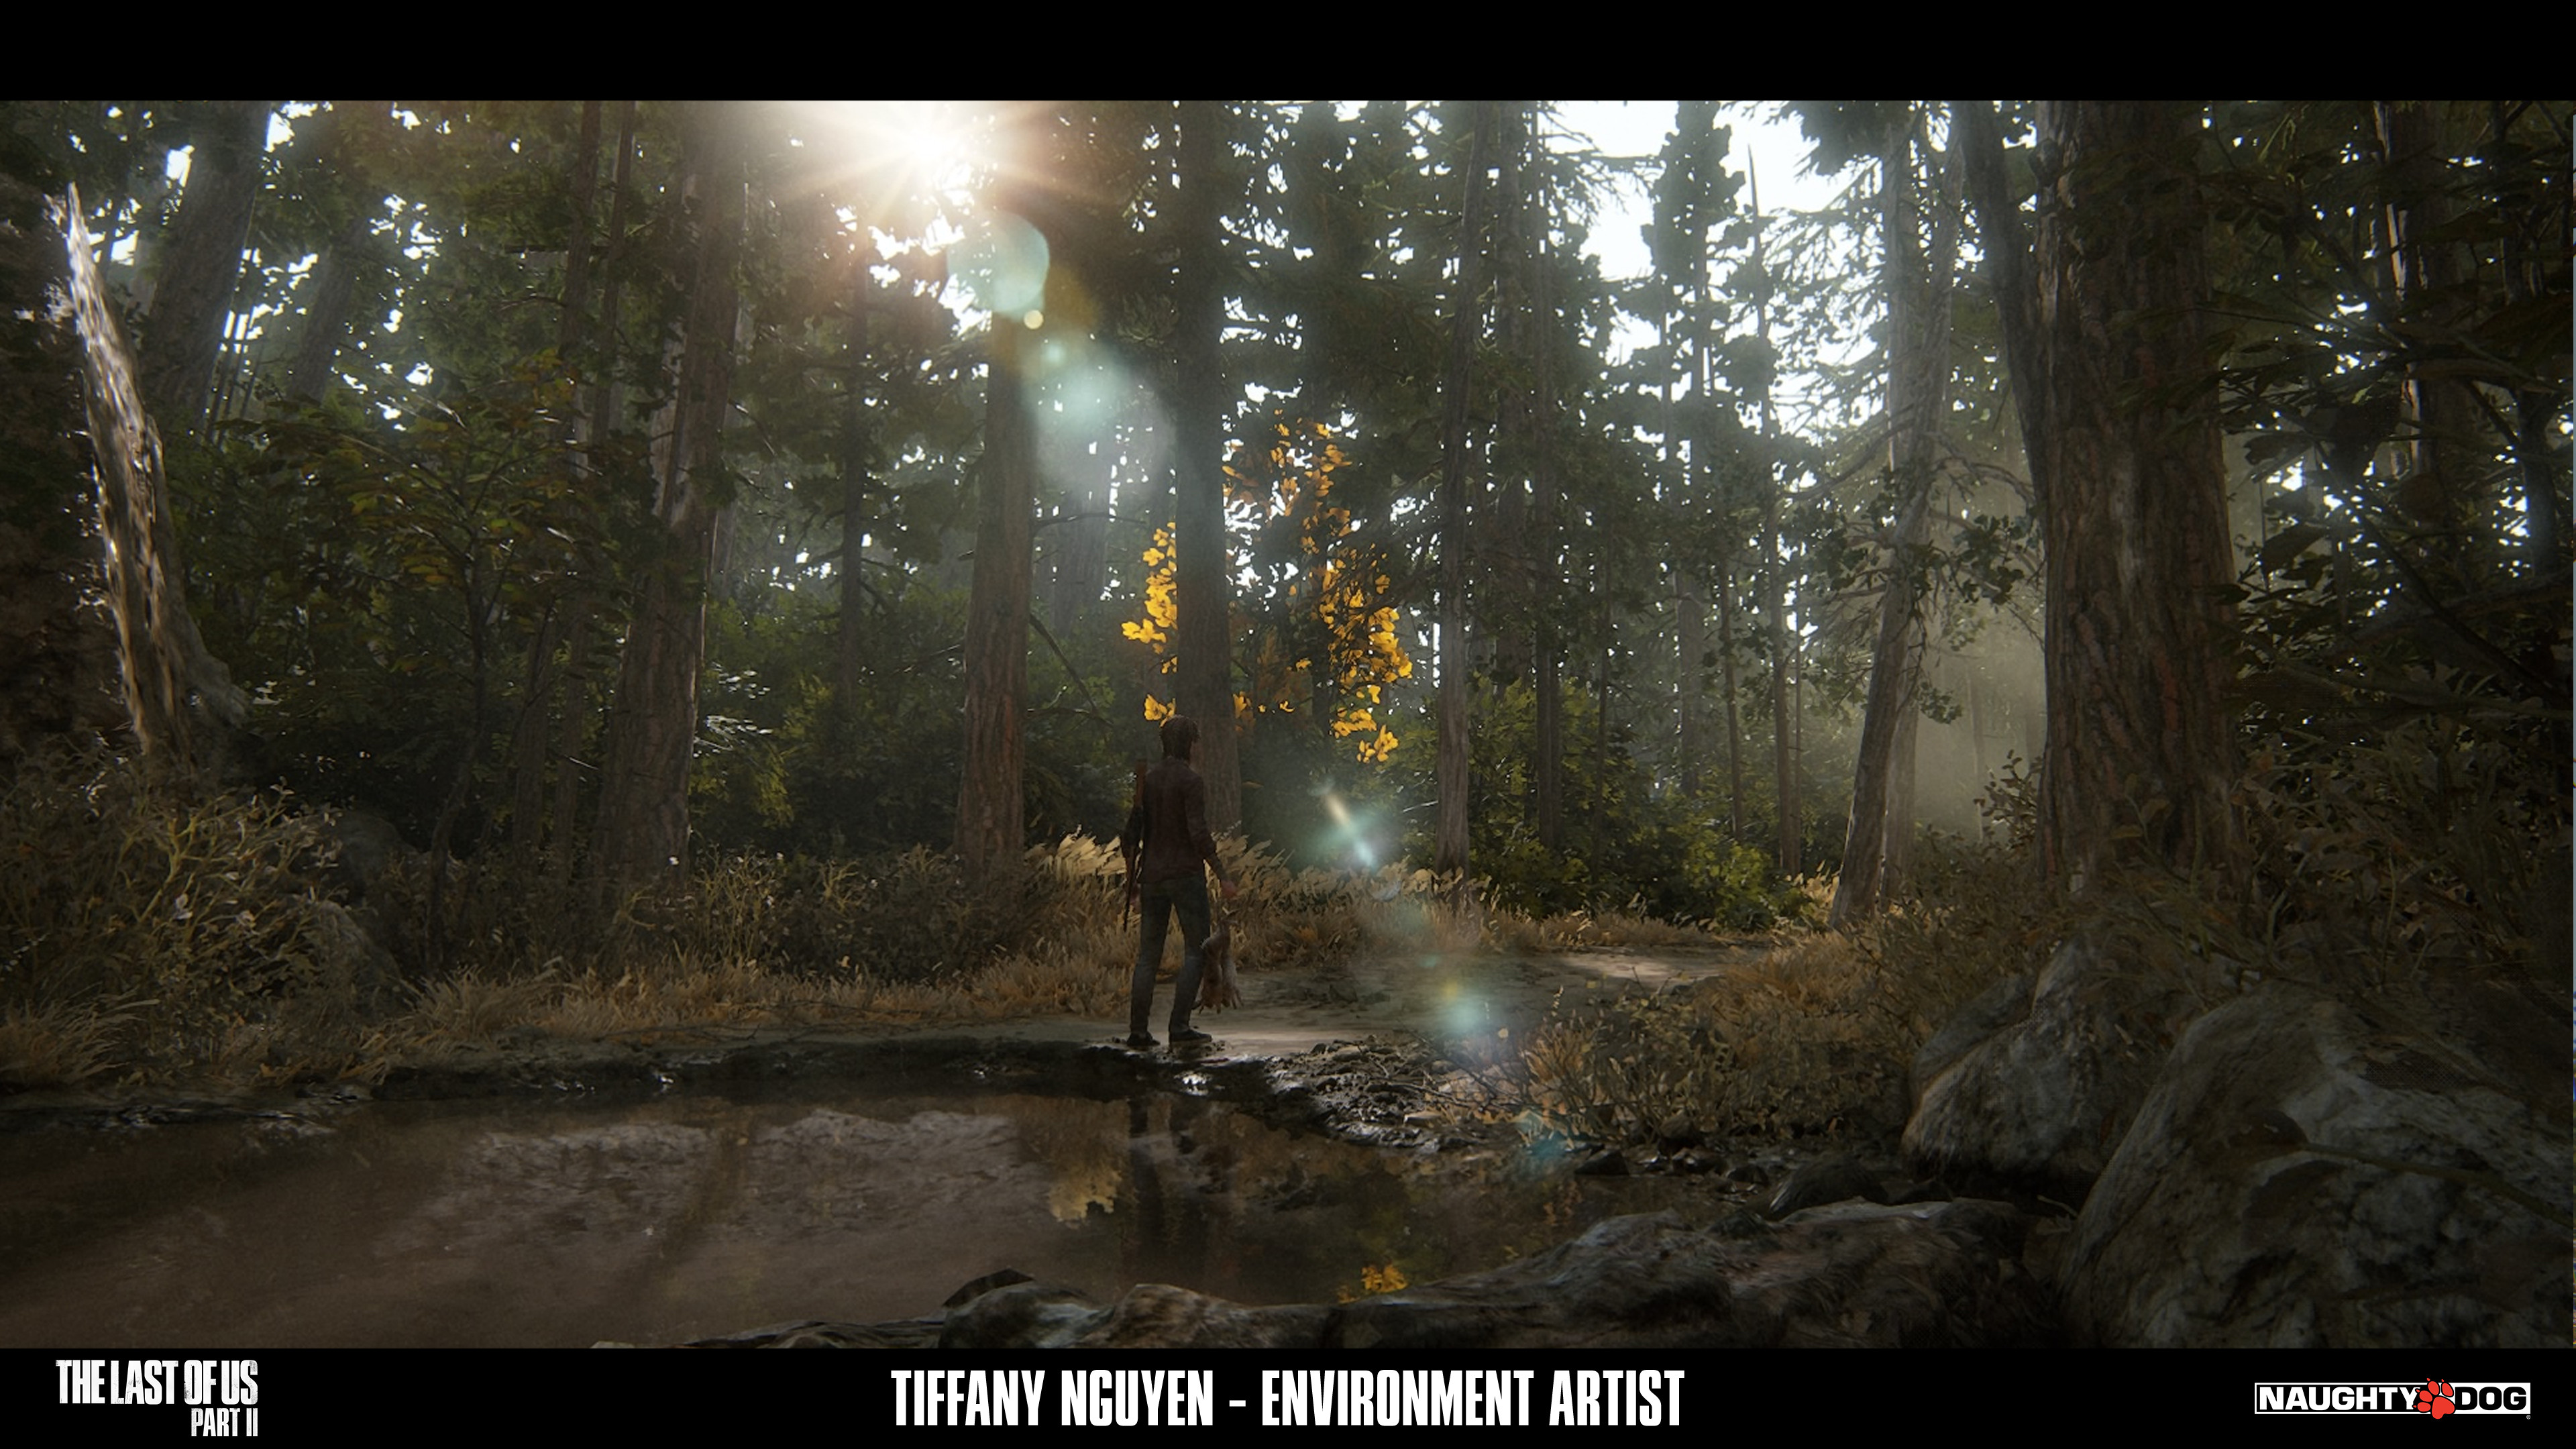 ArtStation - The Last of Us Part 3 Fanfic